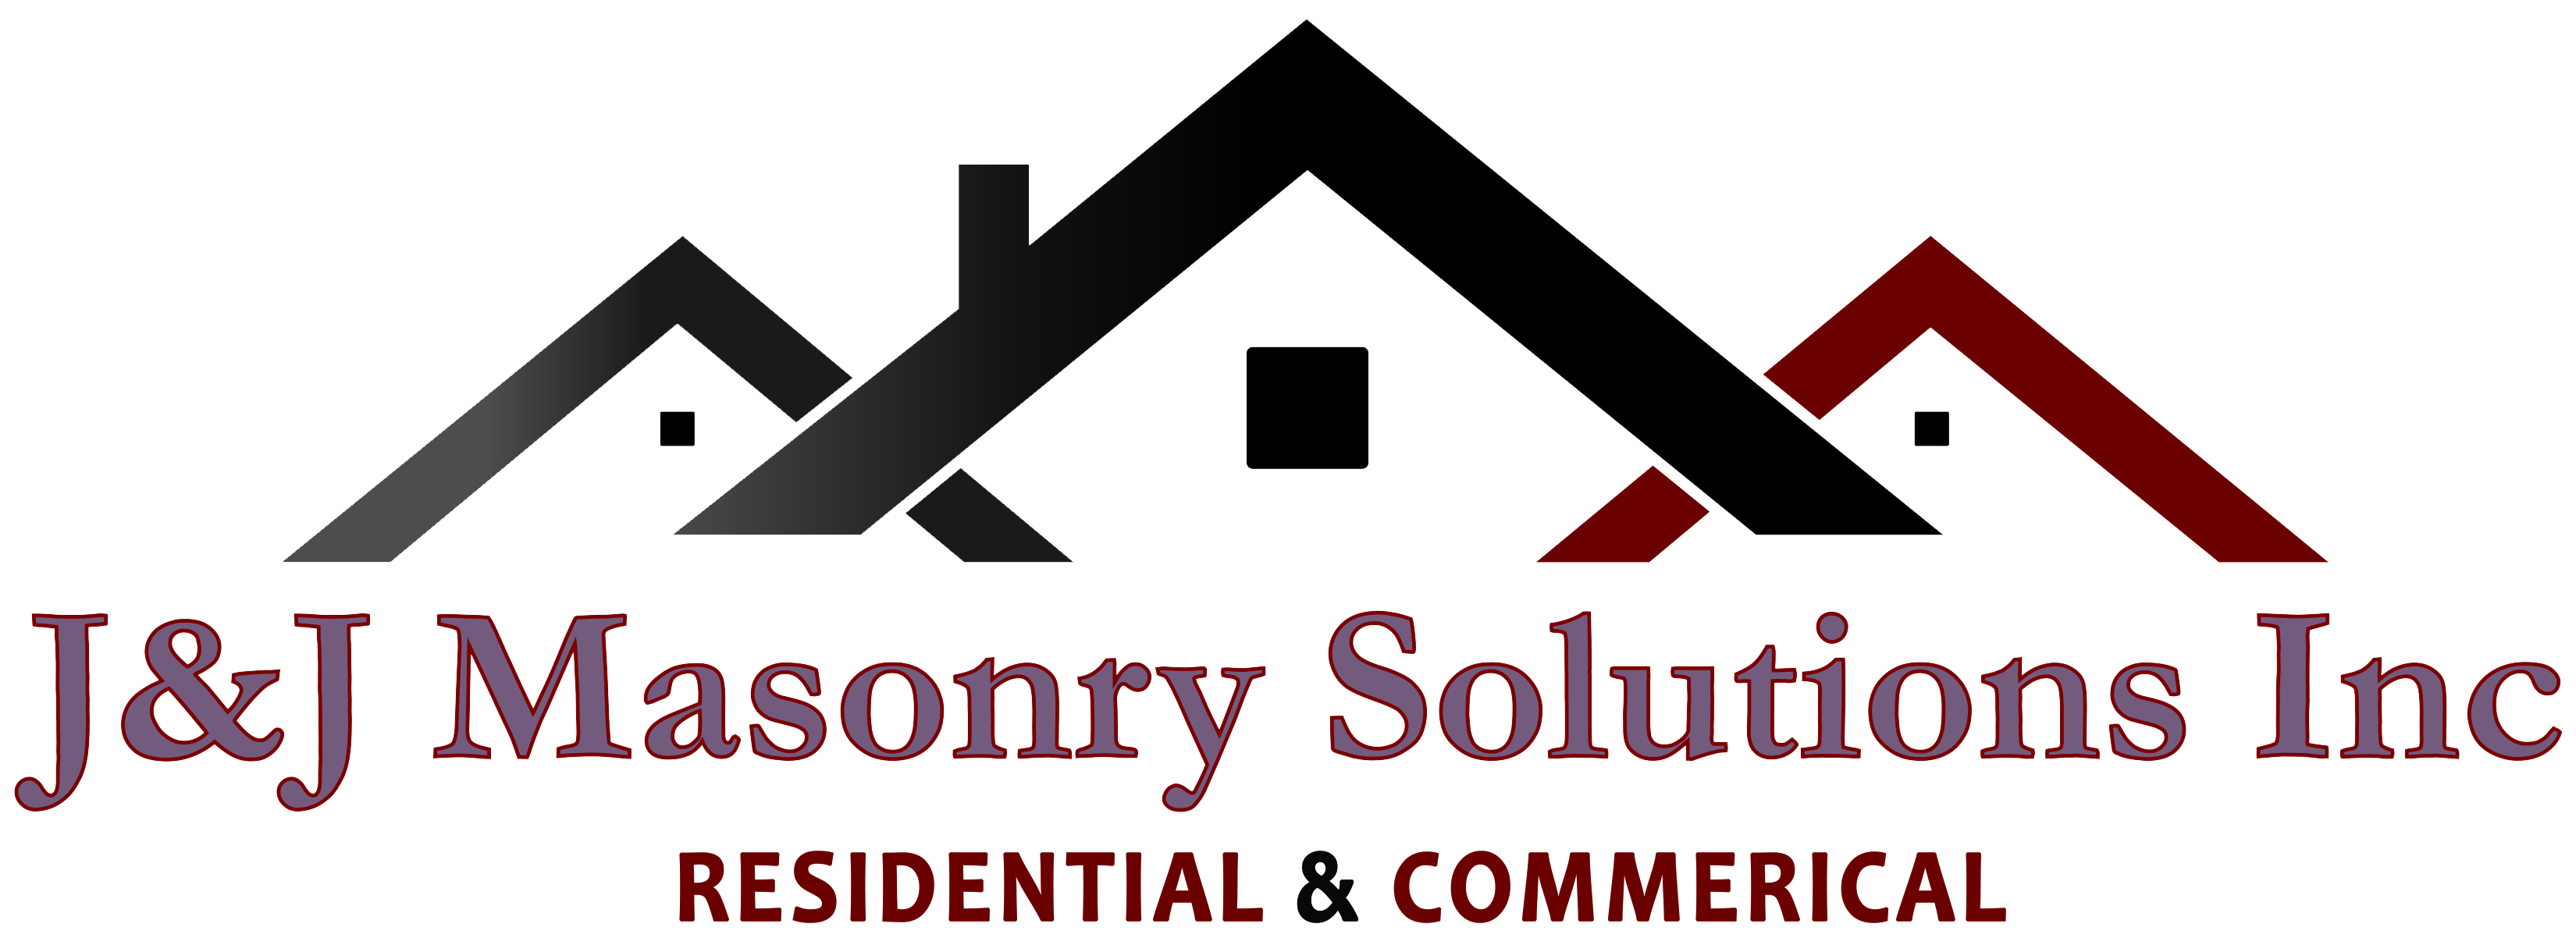 J&J Masonry Solutions